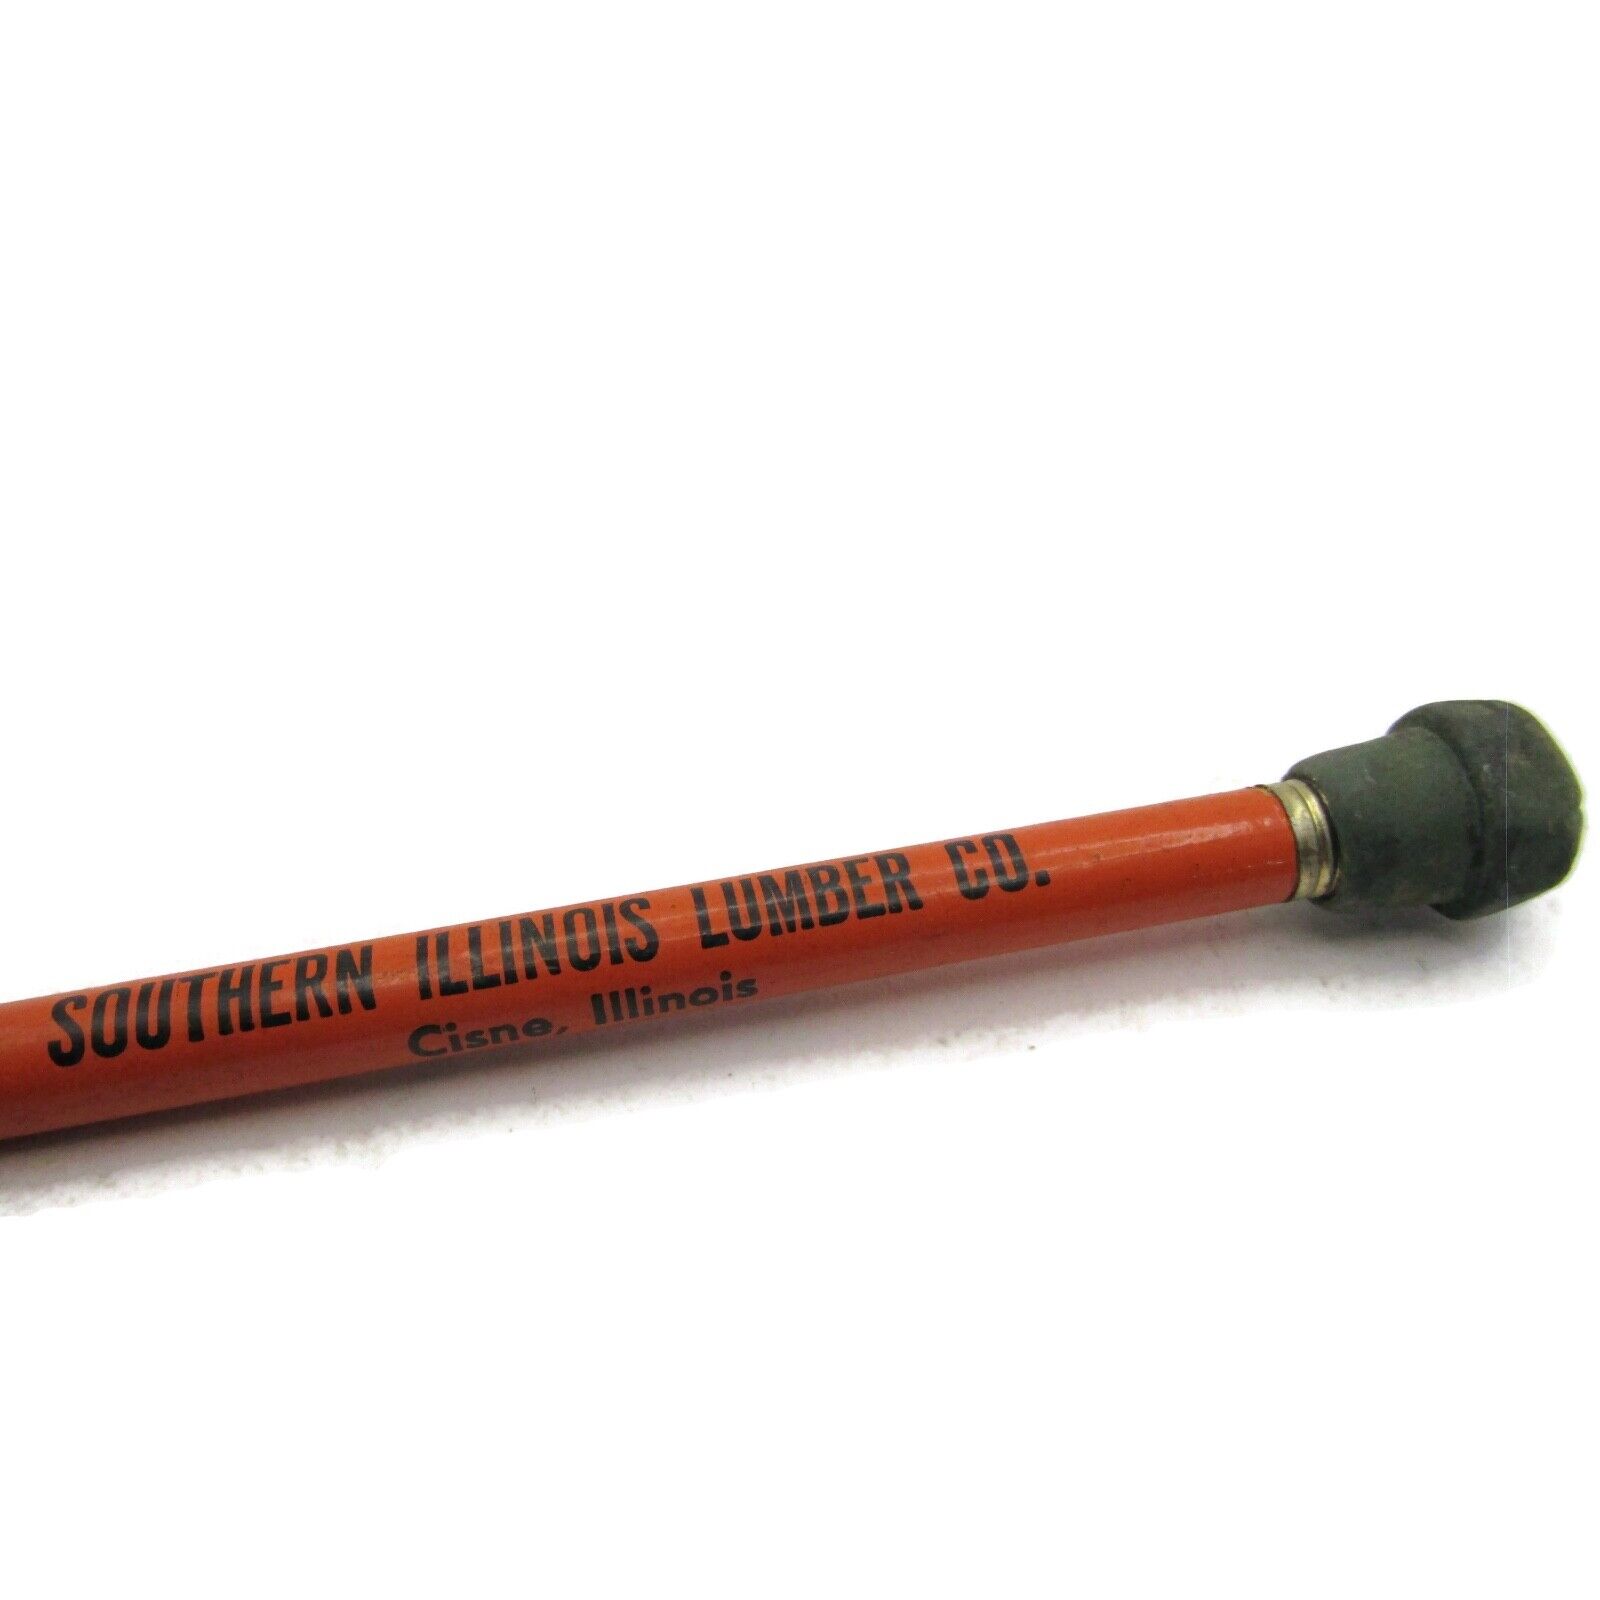 Cisne Illinois Southern Illinois Lumber Co. Advertising Pencil Vintage